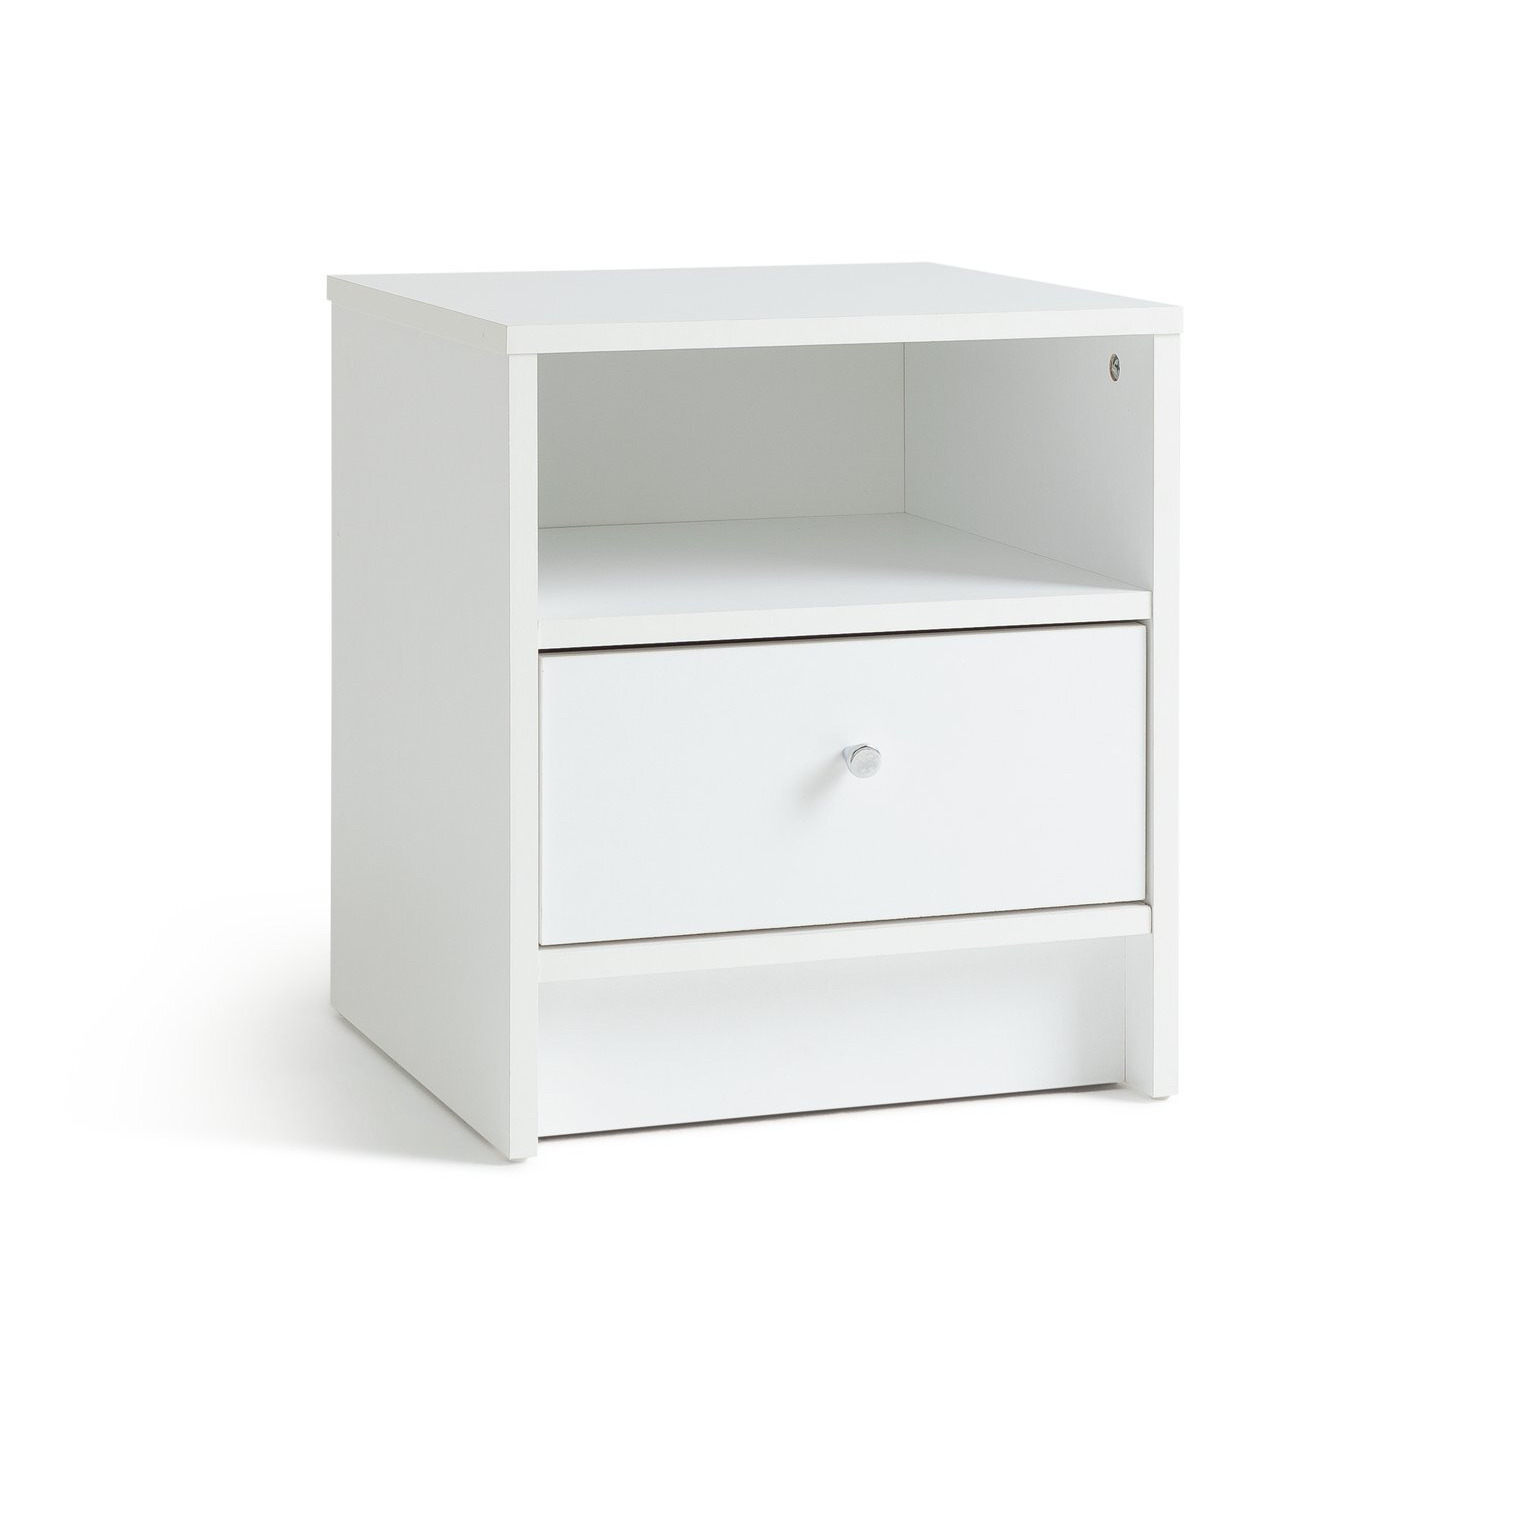 Argos Home Malibu 1 Drawer Bedside Table - White - image 1